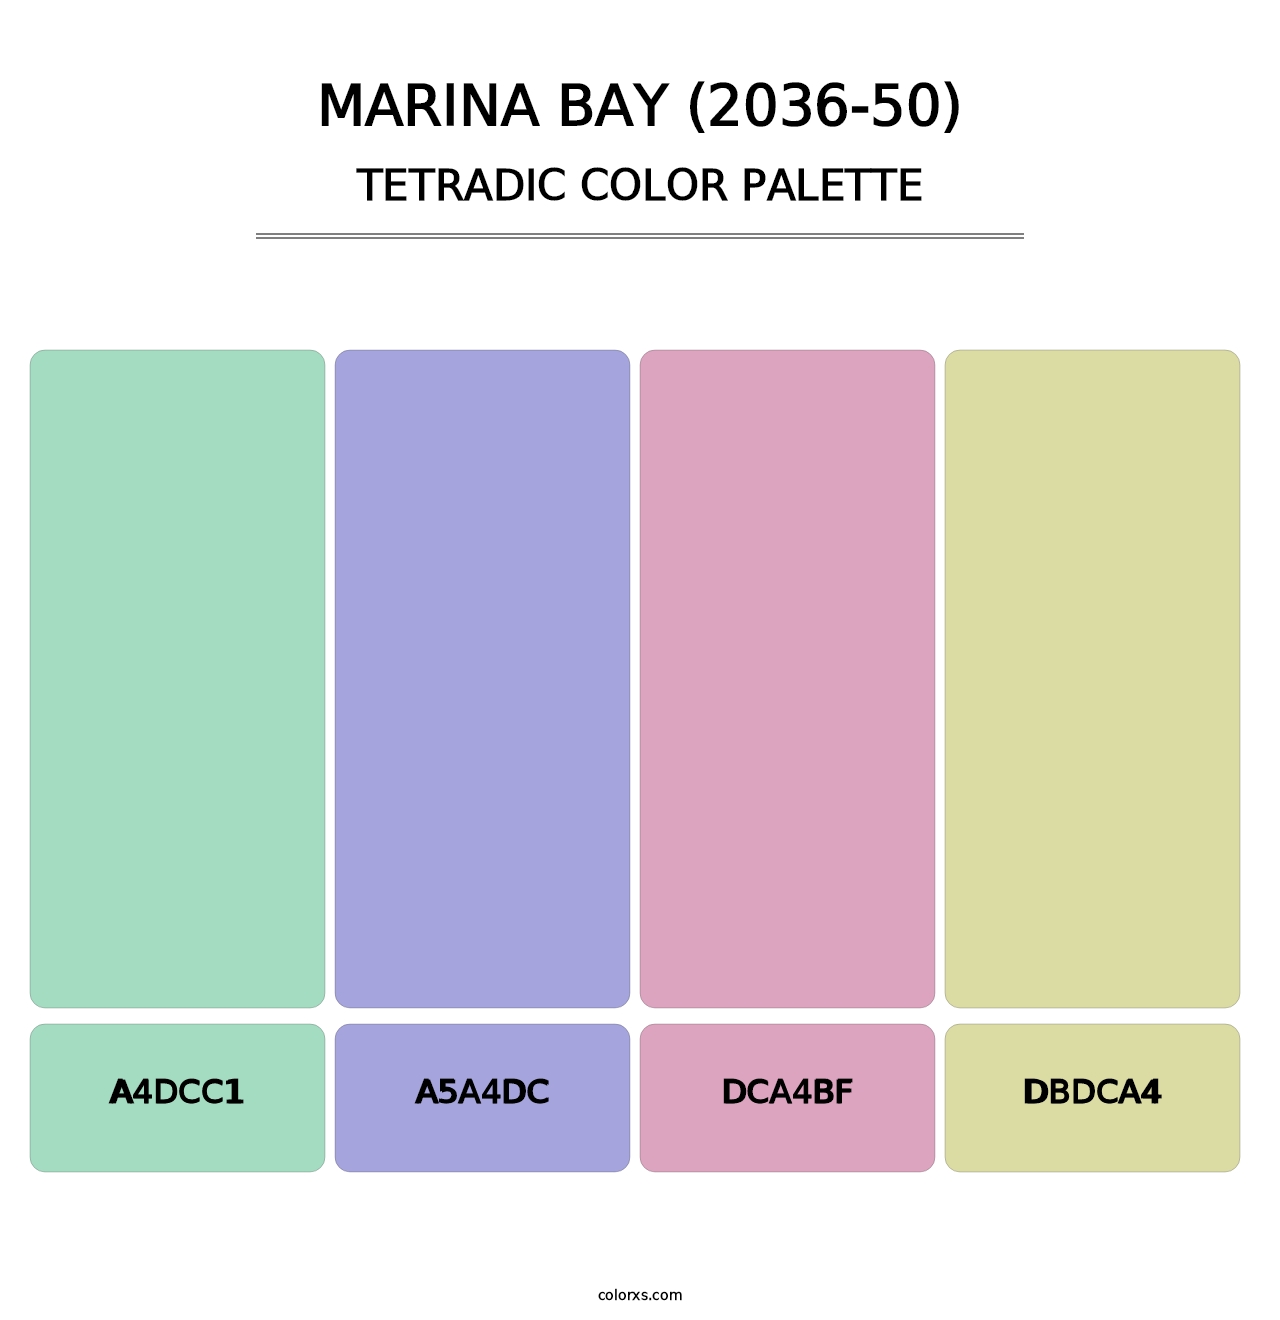 Marina Bay (2036-50) - Tetradic Color Palette